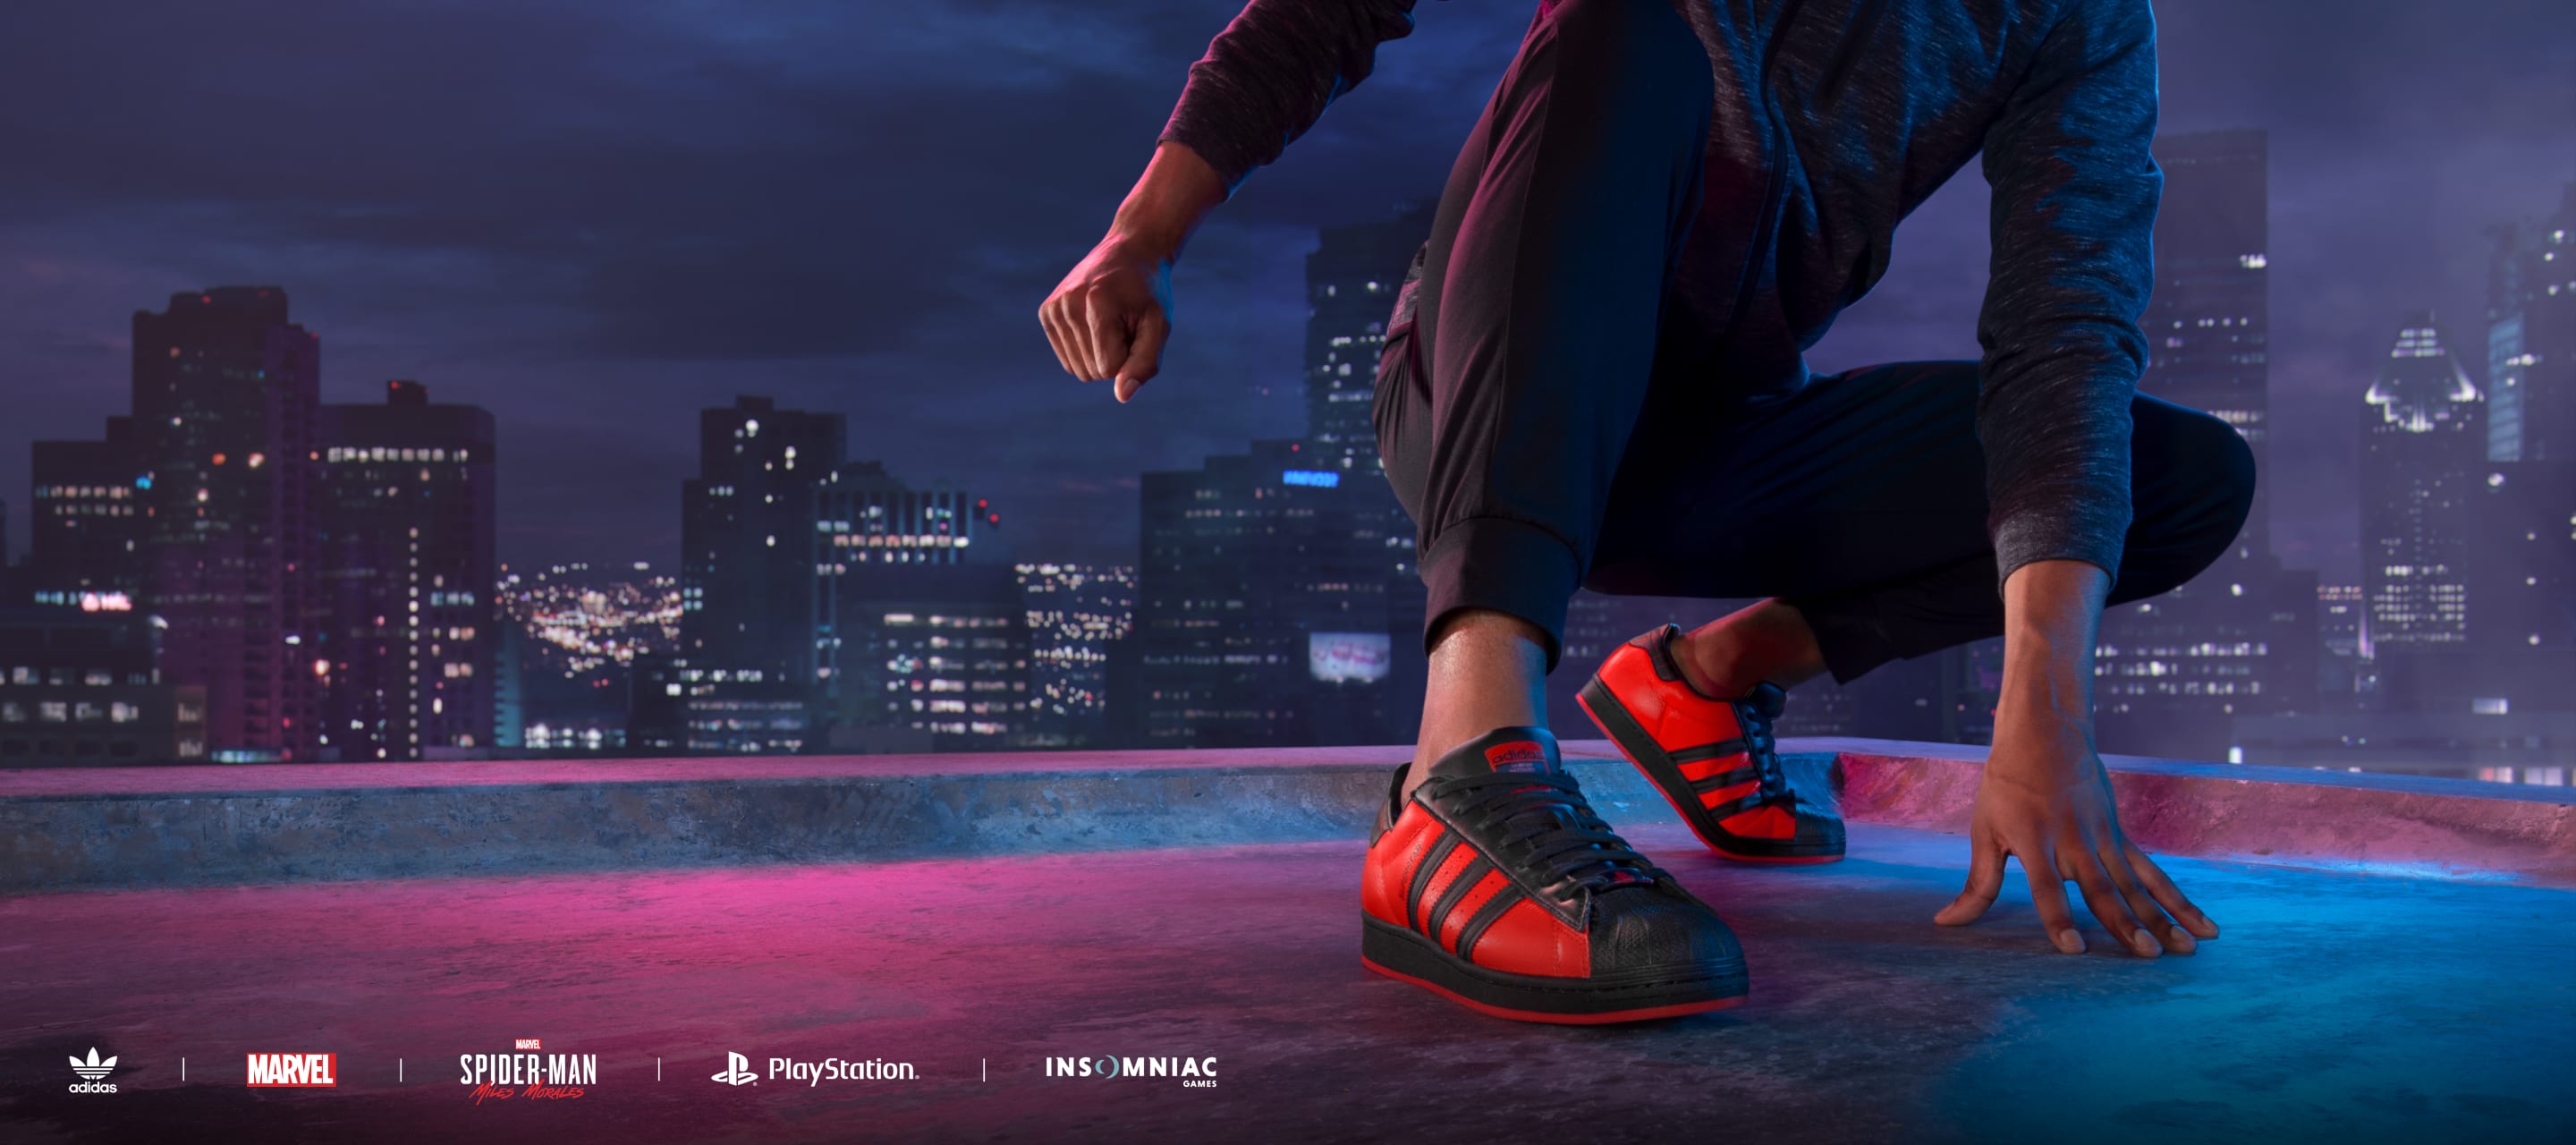 adidas Marvel's Spider-Man: Miles Morales Superstar Shoes - Black | adidas  Philippines